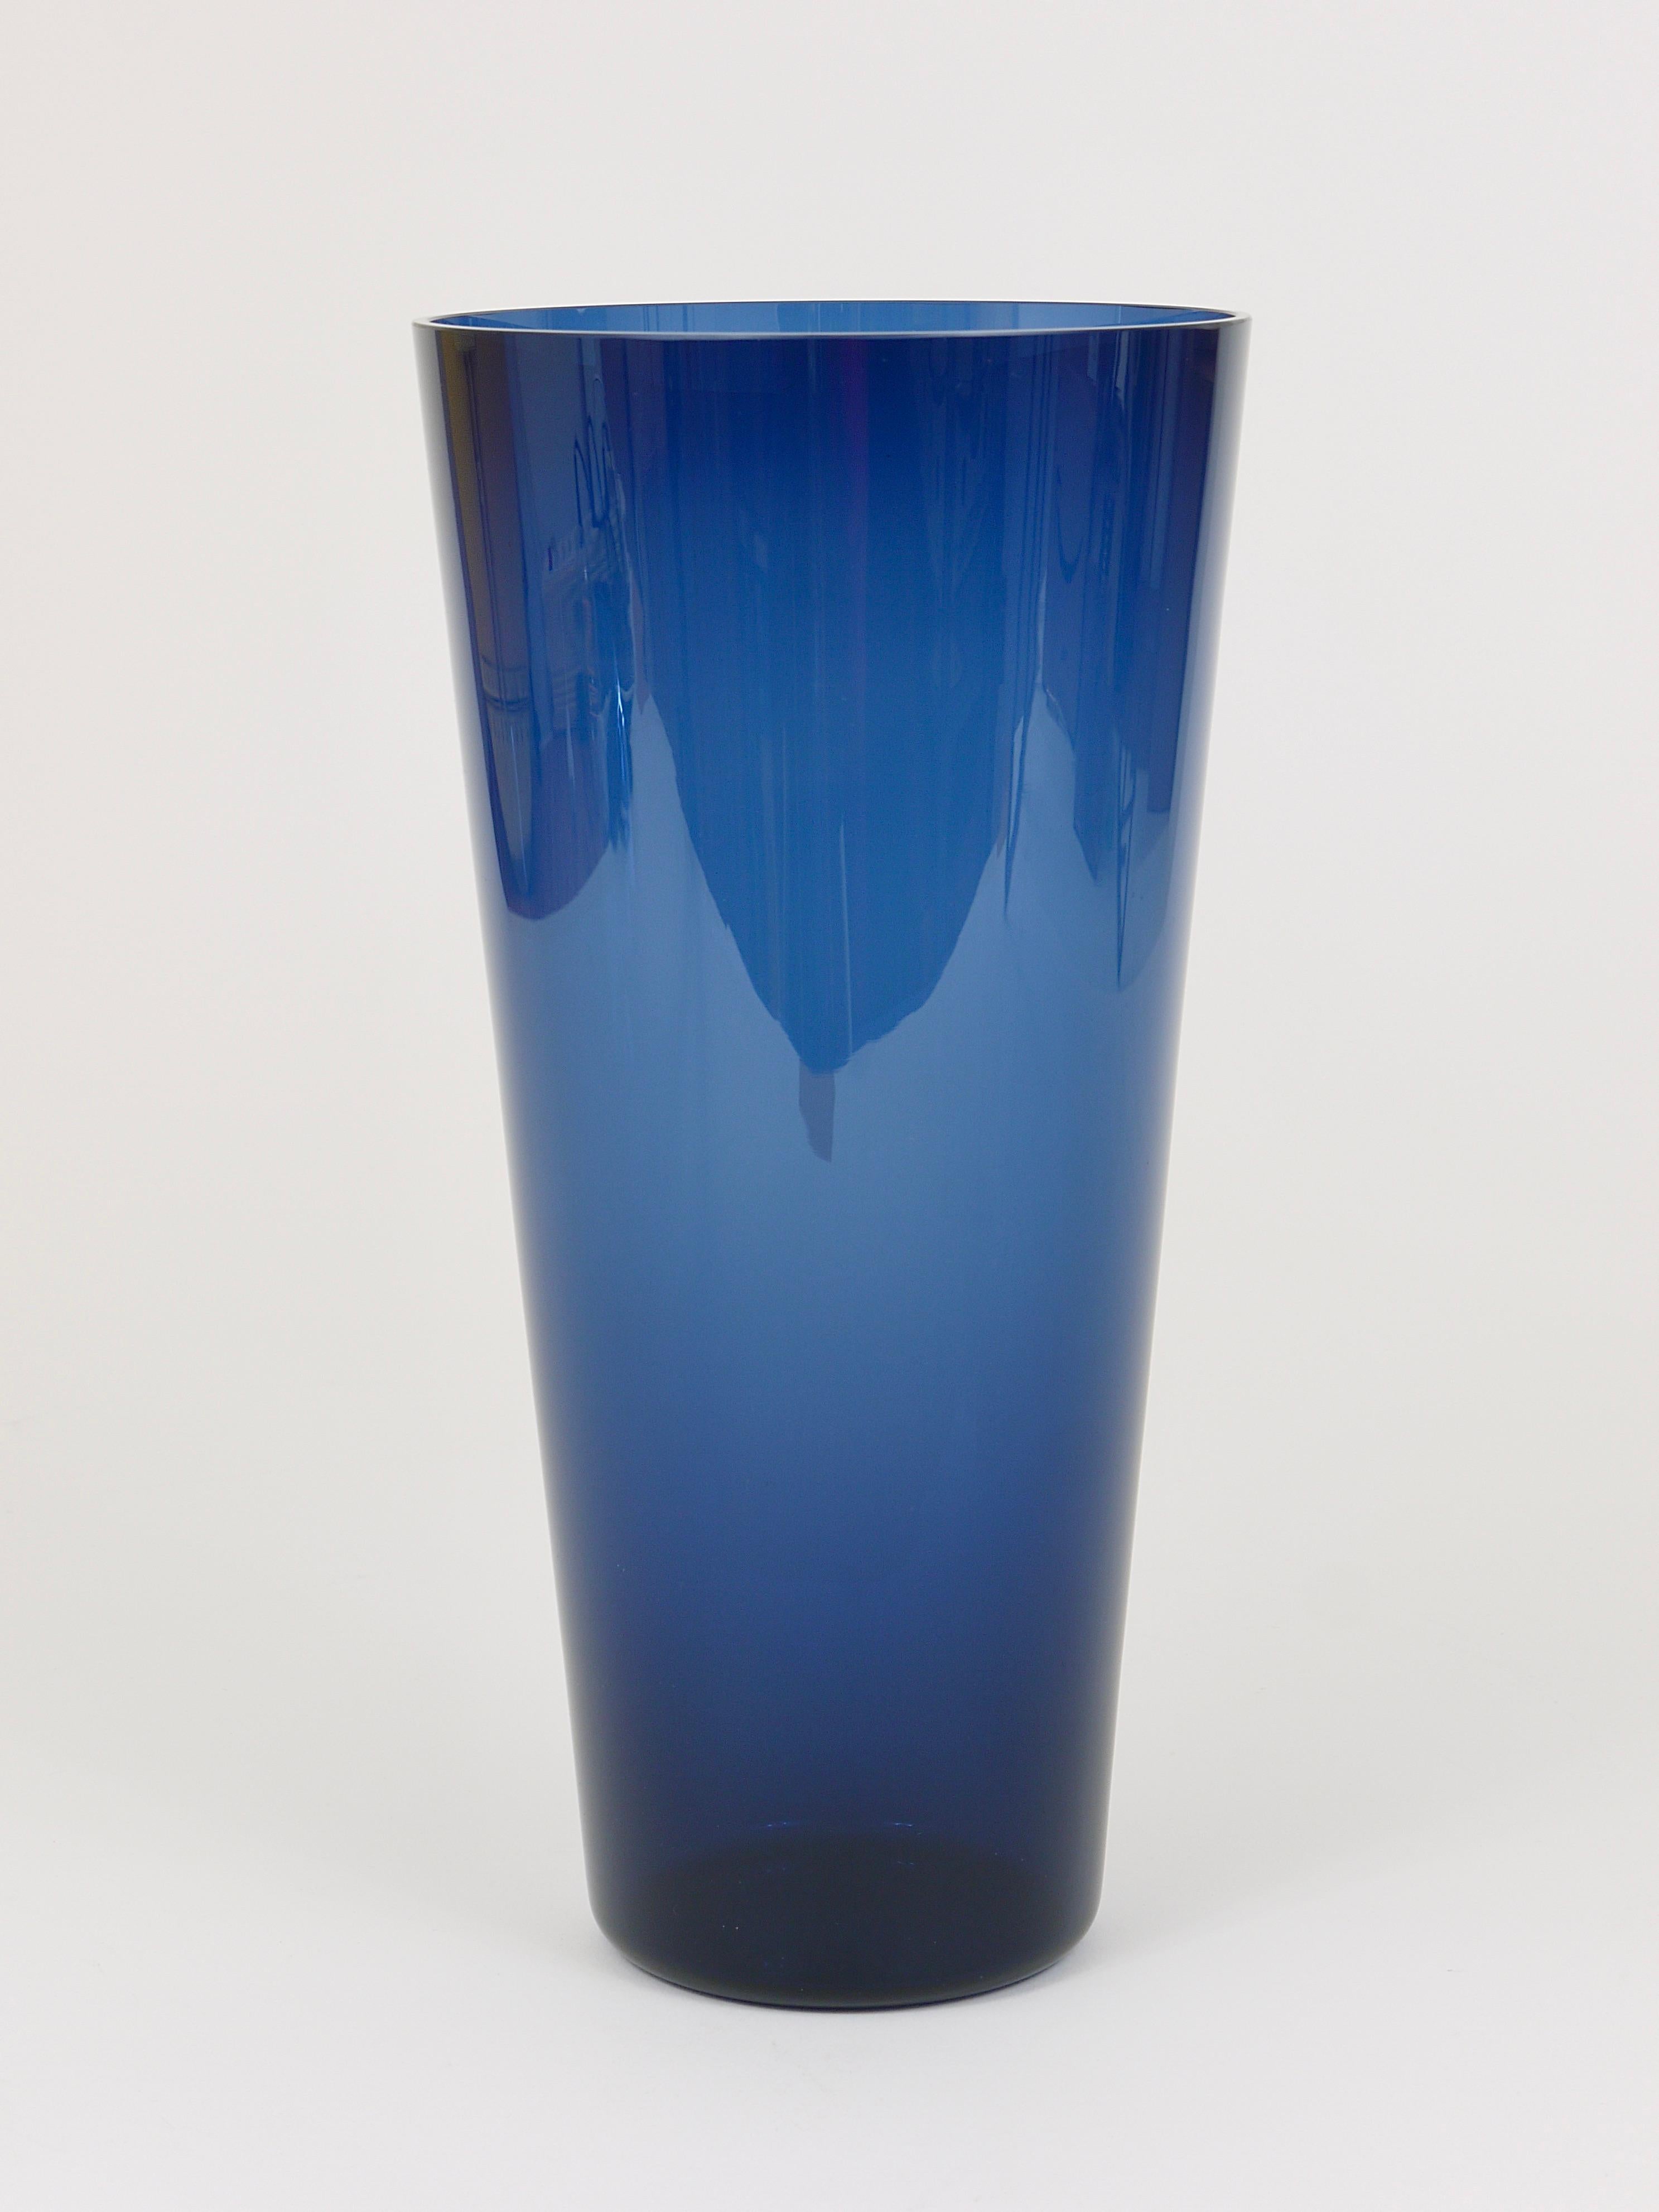 Large Kaj Franck Blue Midcentury Vase Kartio by Nuutajarvi Nottsjo Finland In Good Condition For Sale In Vienna, AT